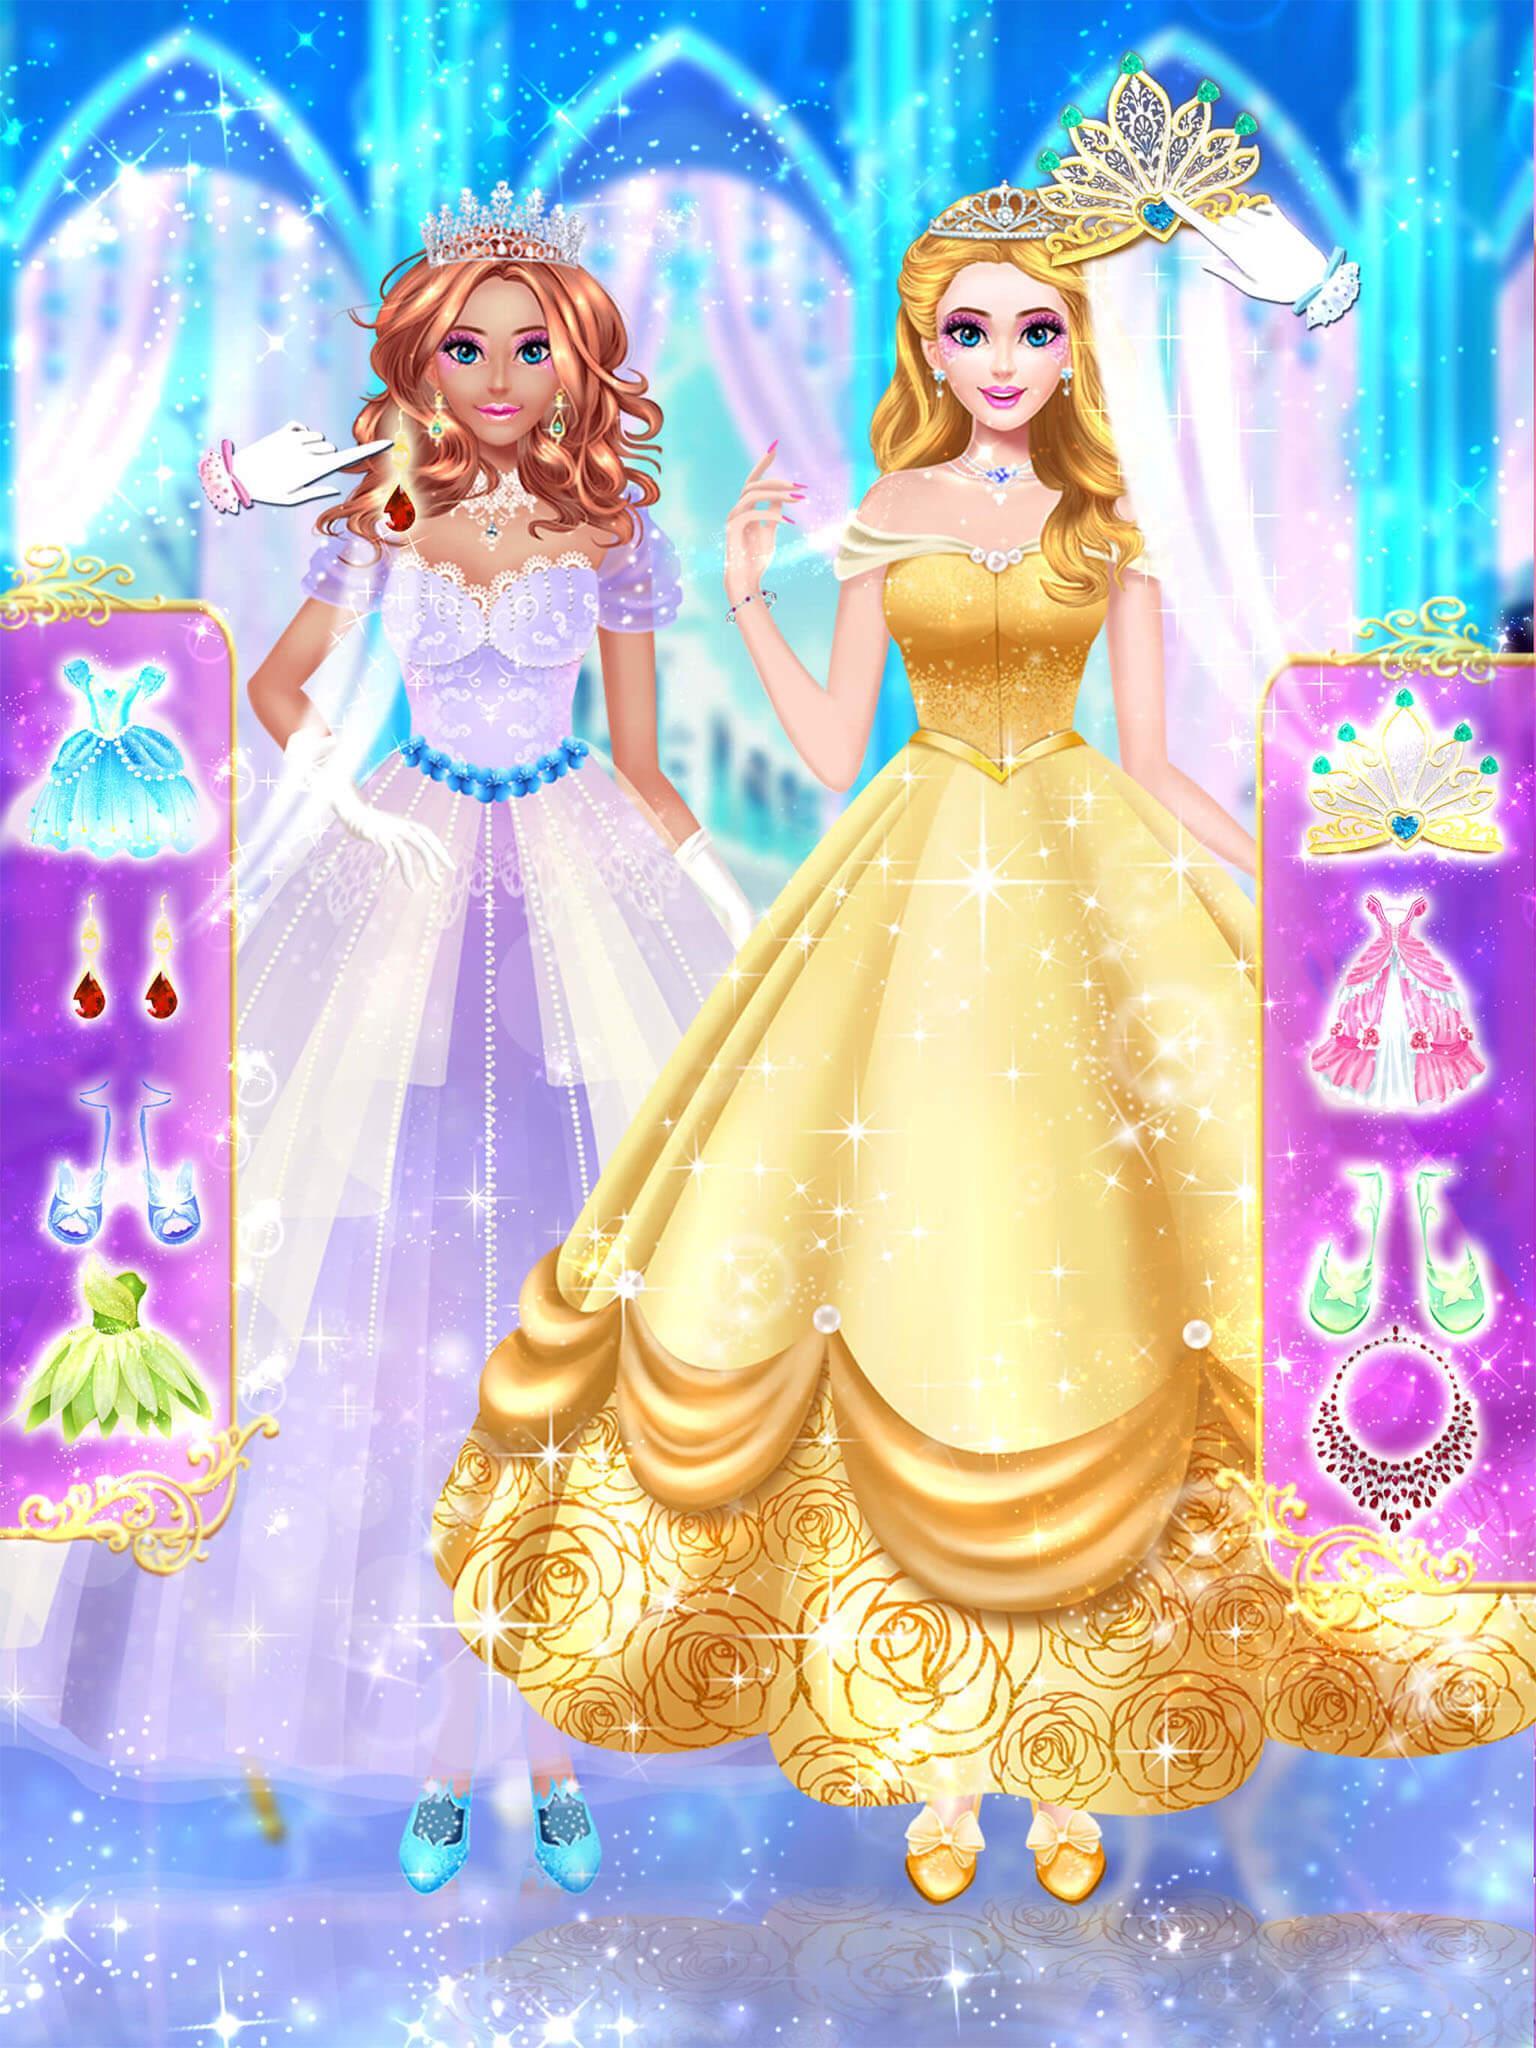 Princess dress up and makeover games 1.3.7 Screenshot 9